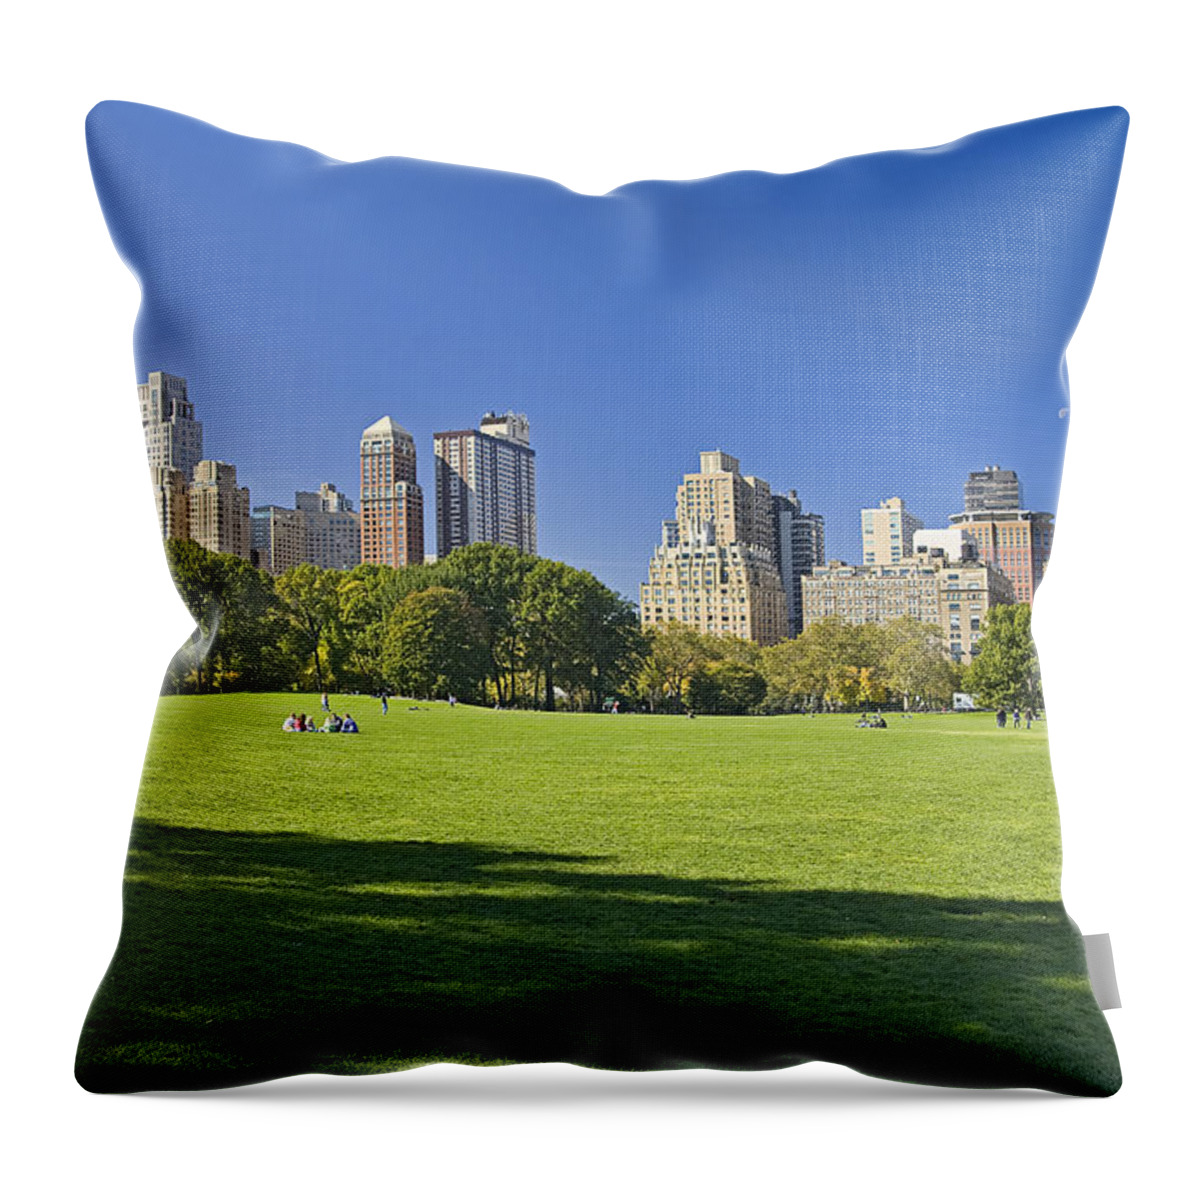 Landscape Throw Pillow featuring the photograph Sunny Central Park by Mark Harrington